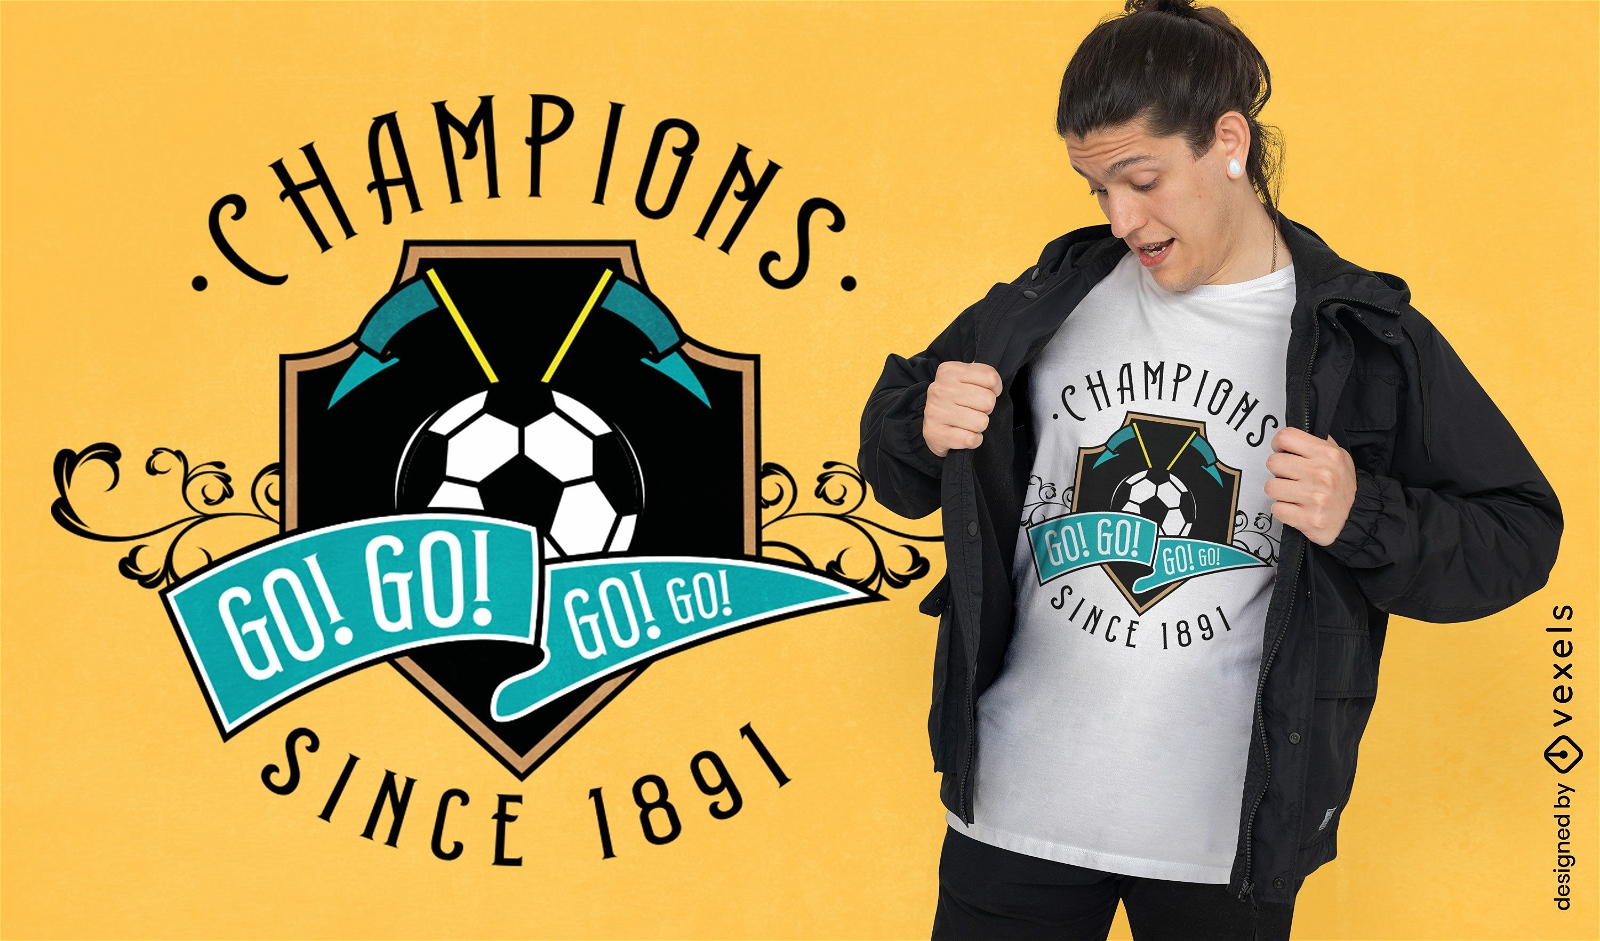 Go champions soccer badge t-shirt design